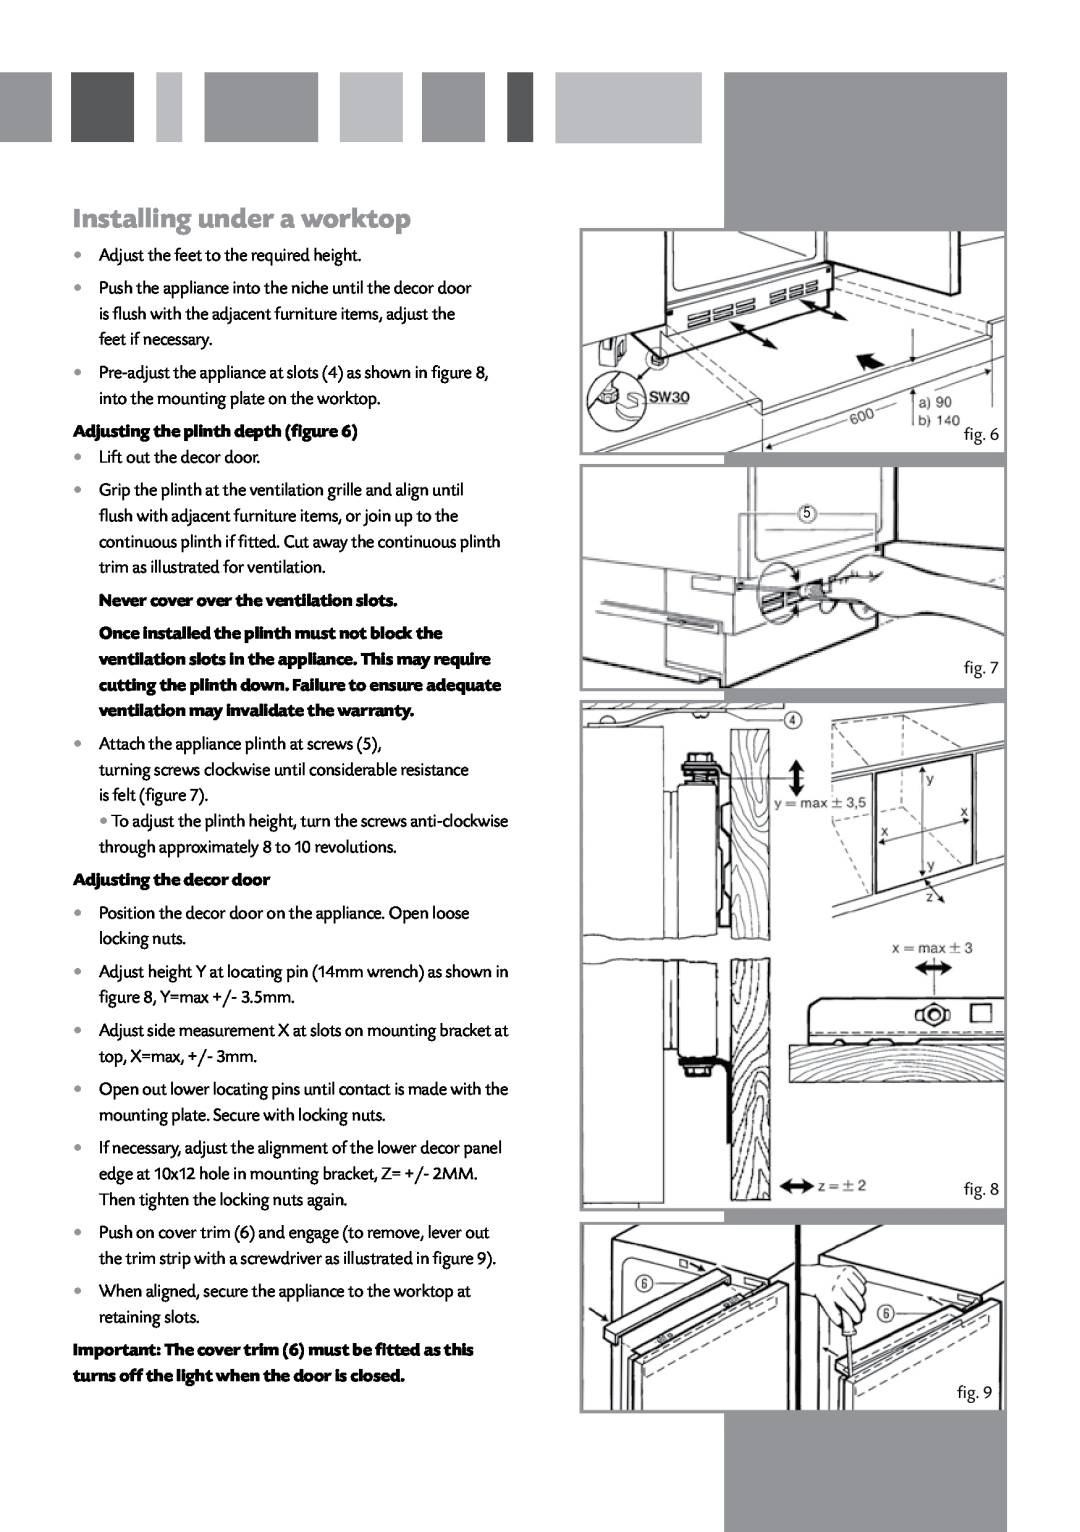 CDA FW281 manual Installing under a worktop, Adjusting the plinth depth figure, Never cover over the ventilation slots 